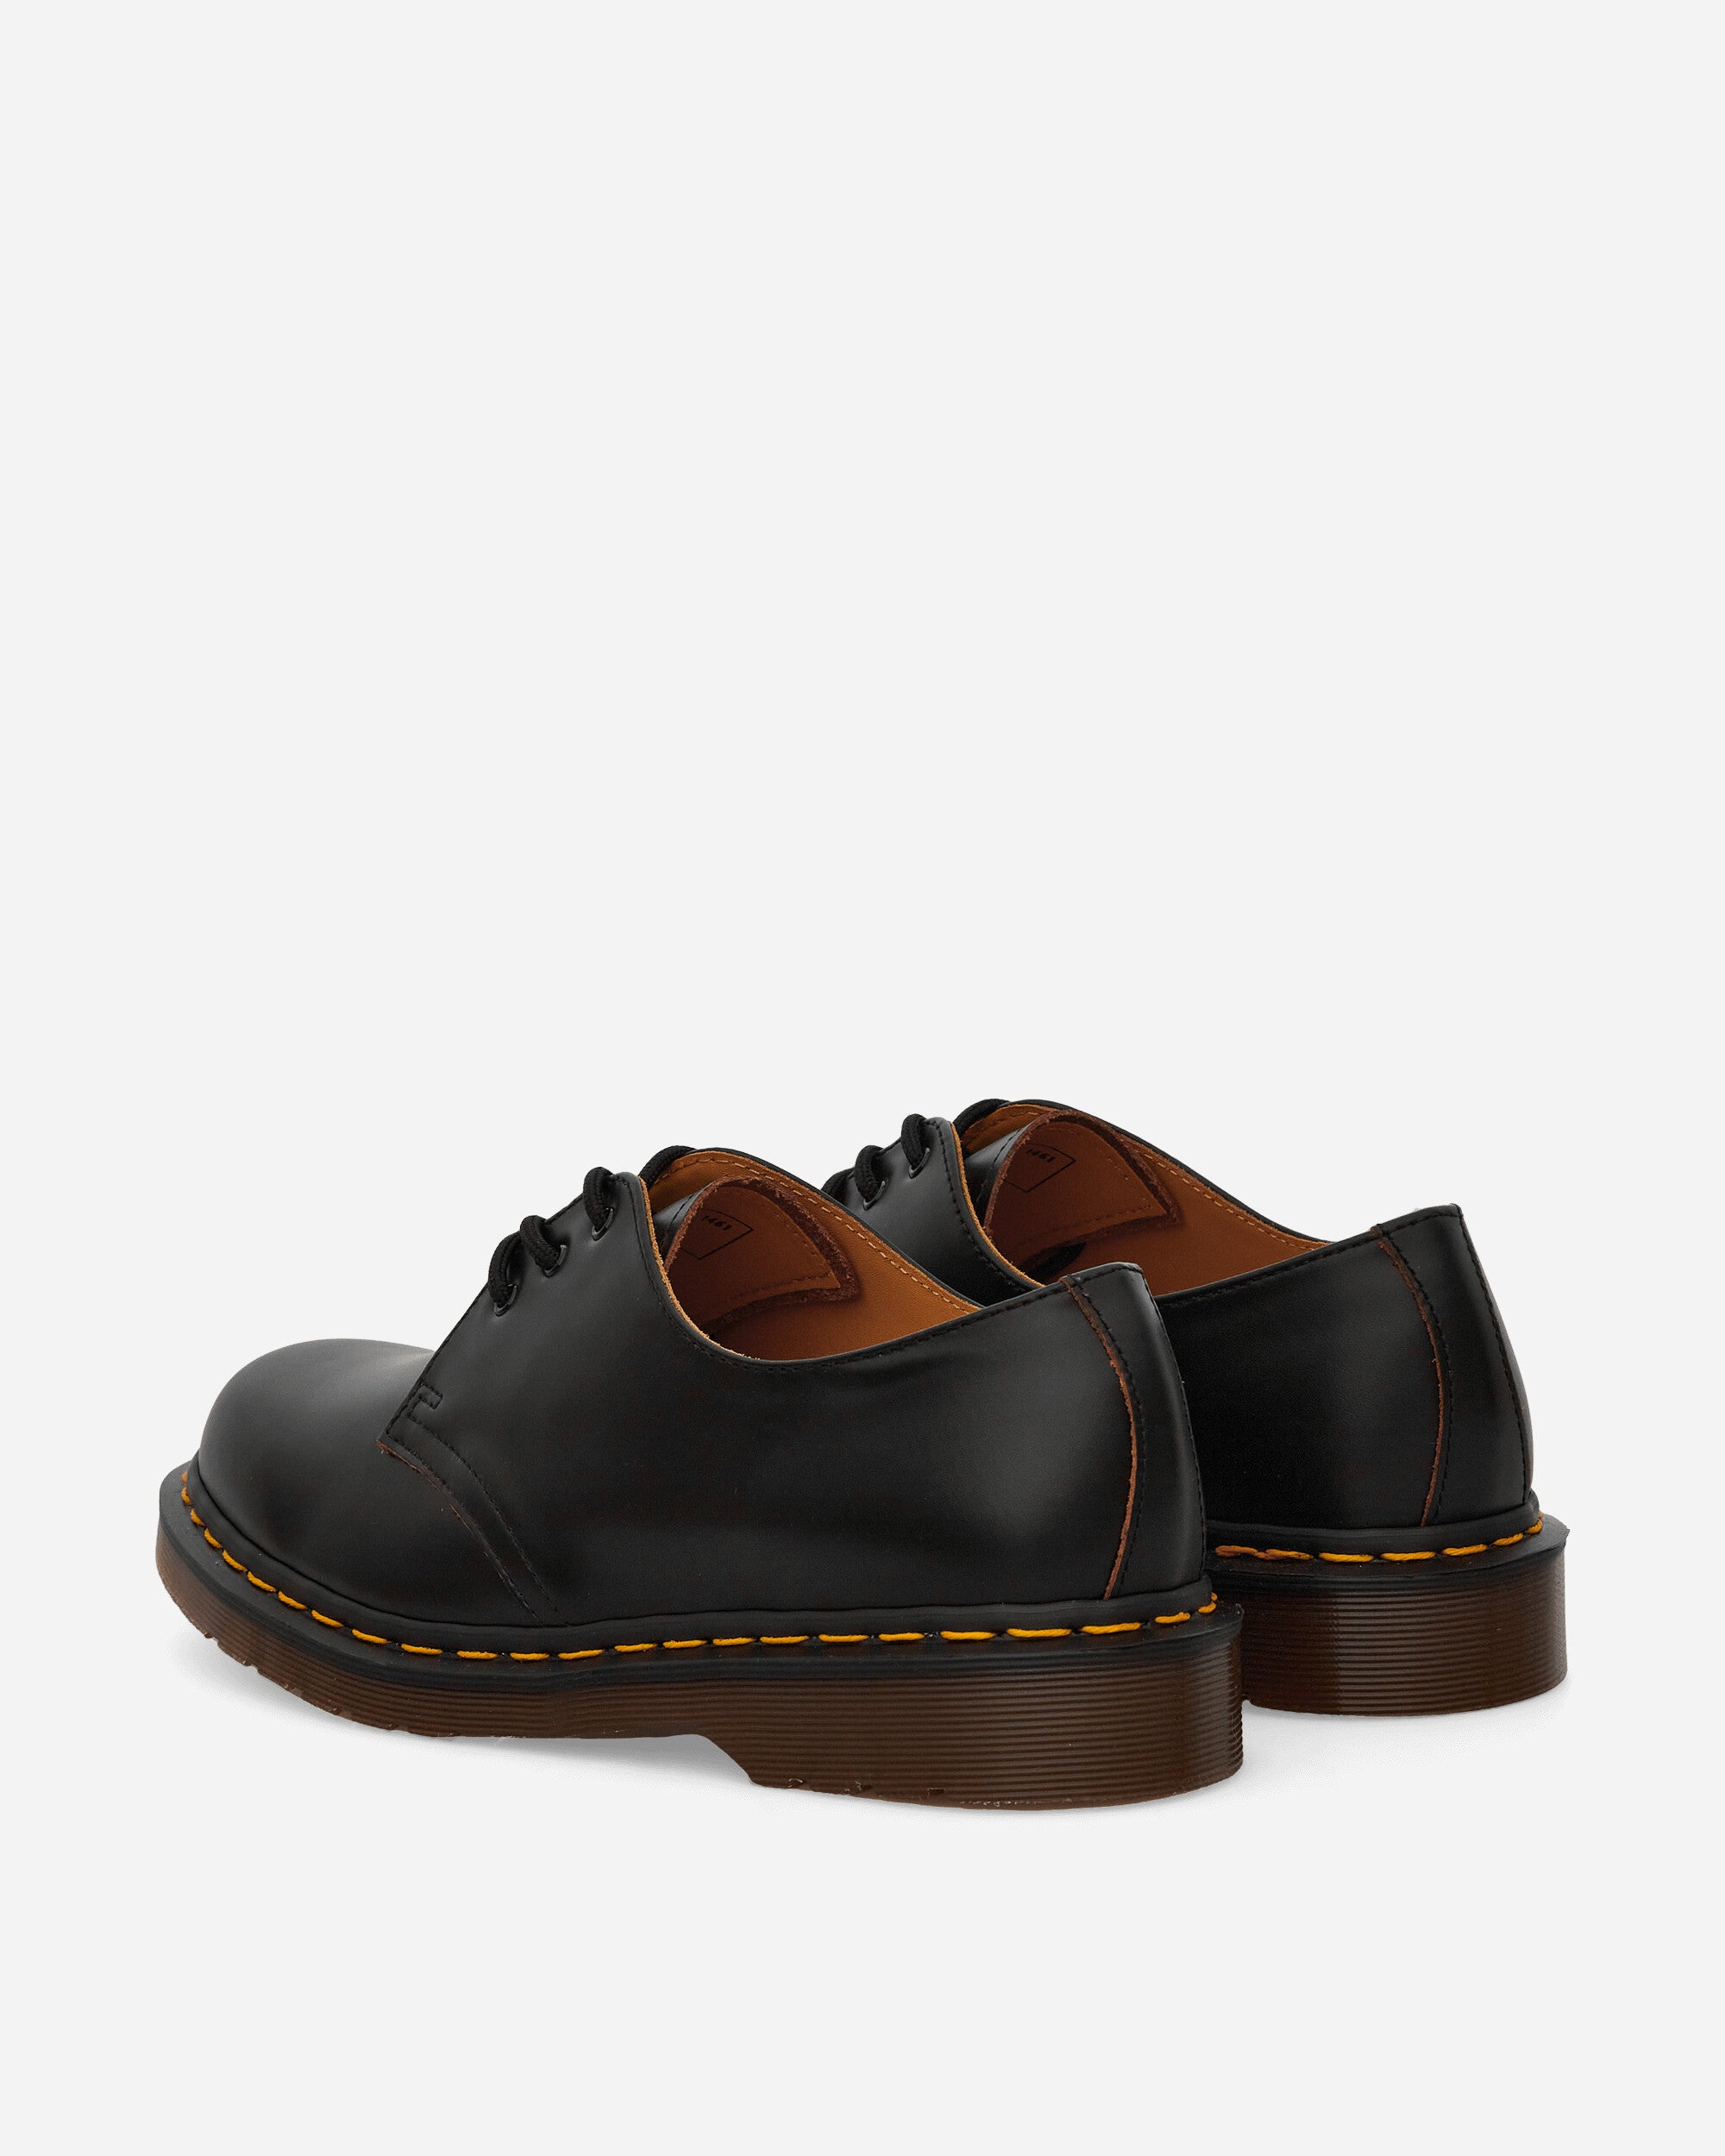 Dr. Martens Vintage 1461 Black Classic Shoes Laced Up 12877001 BLACK